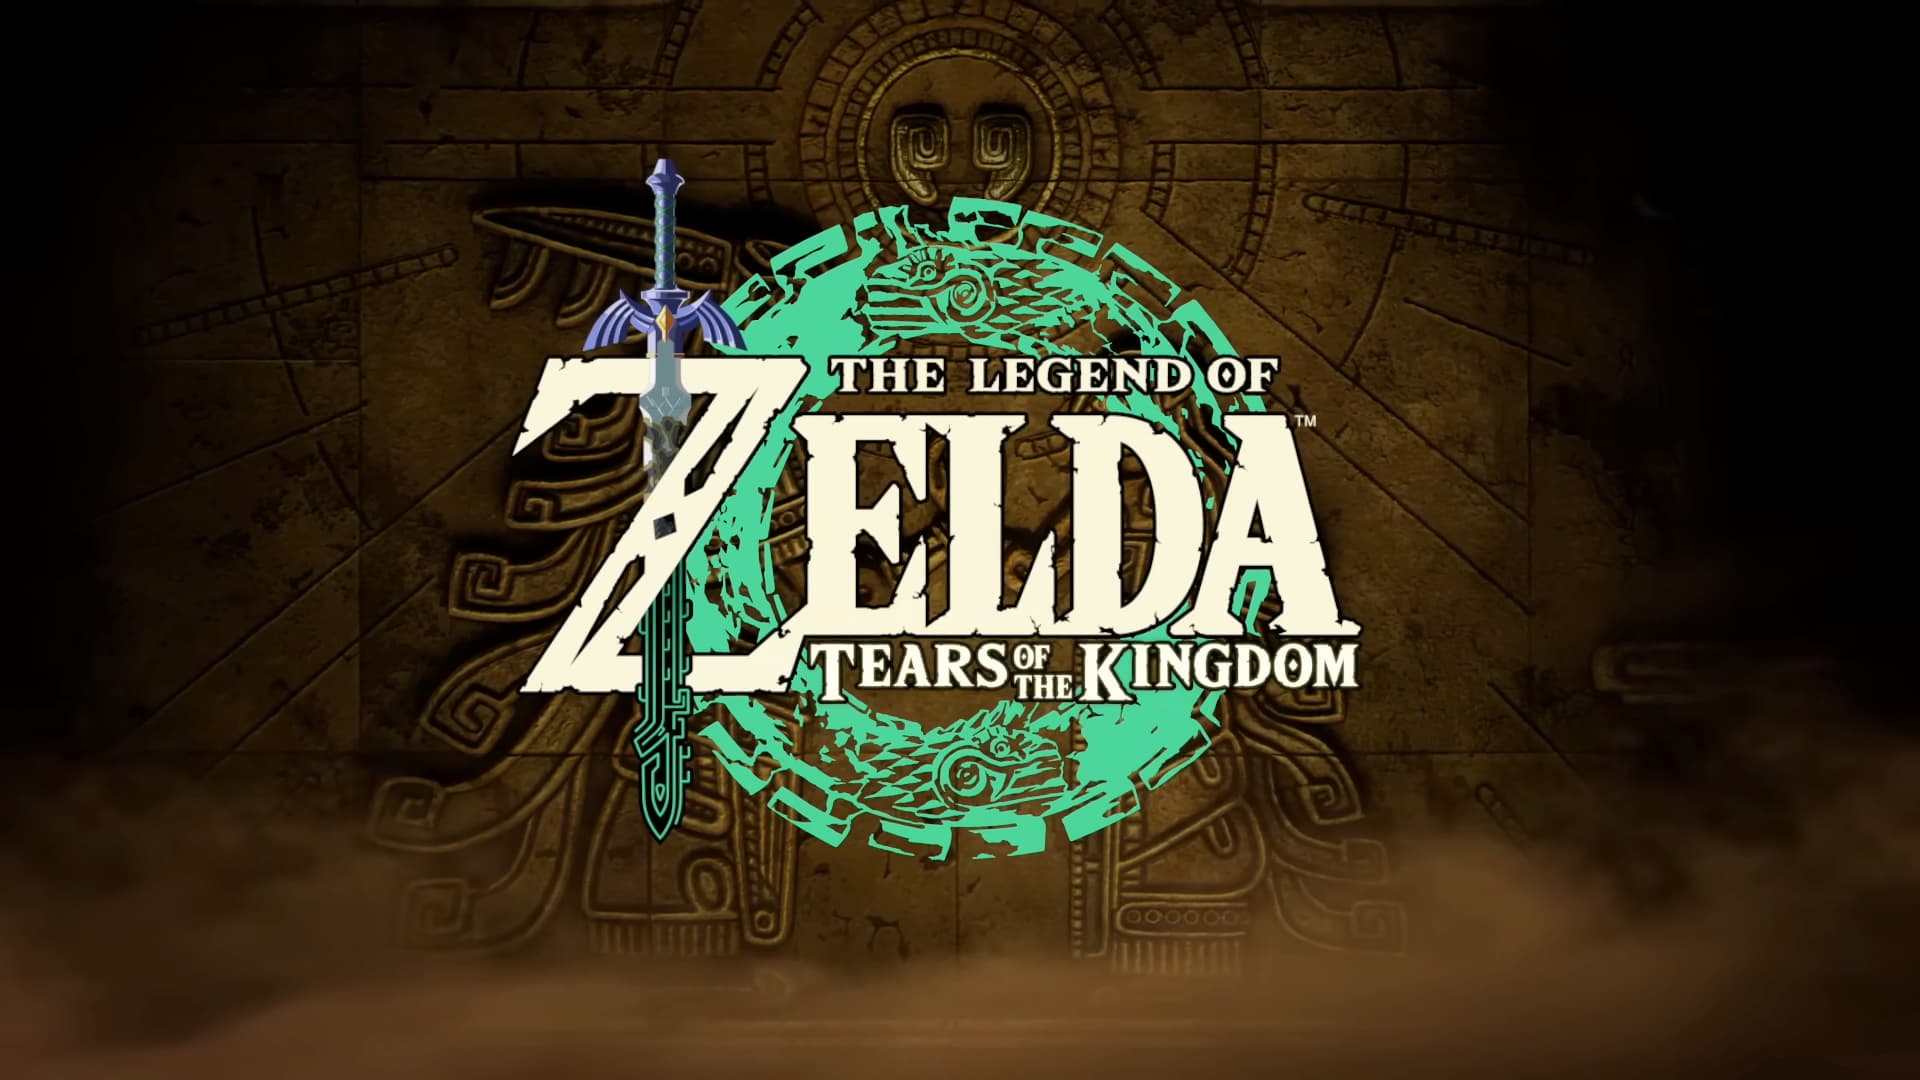 NV99  GOTY? Zelda Tears of the Kingdom bate 97 no Metacritic